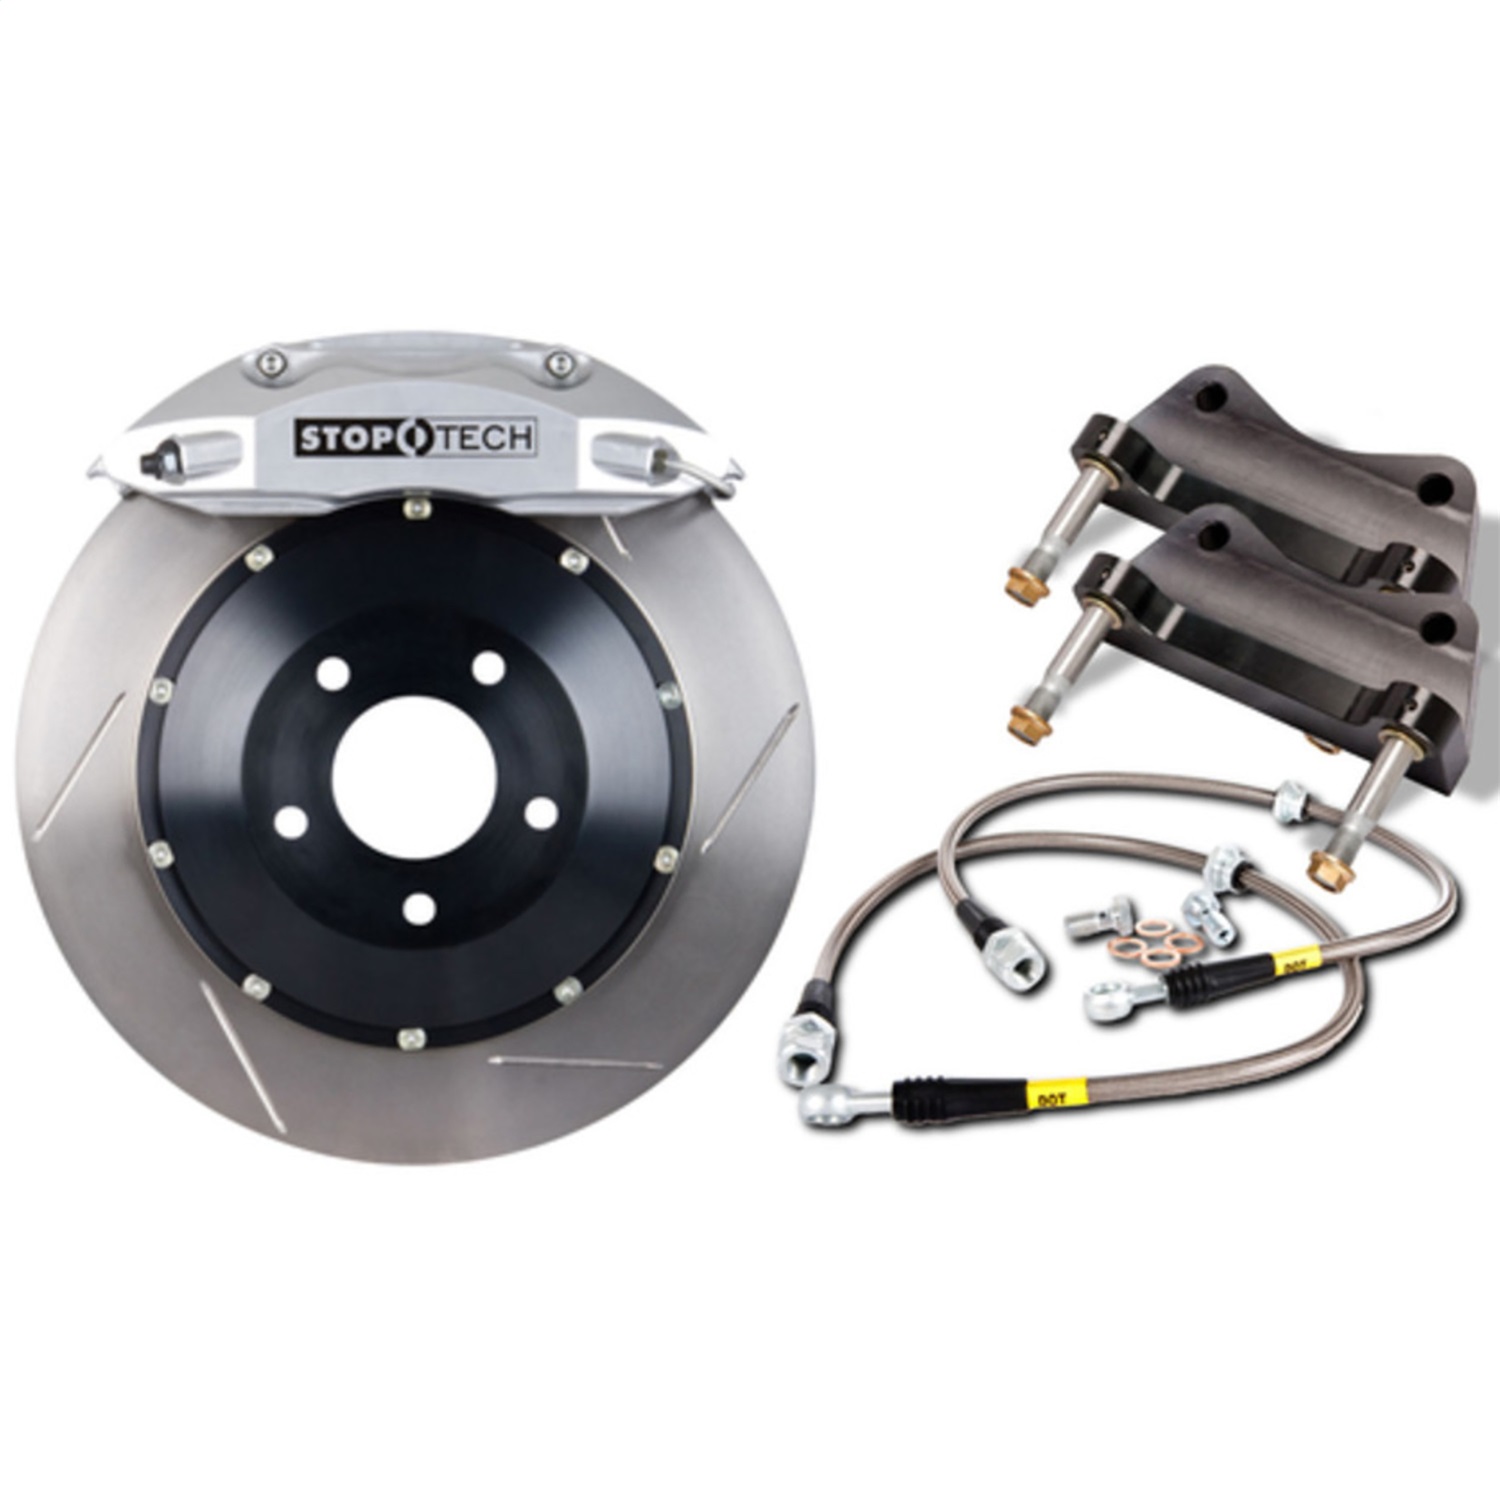 StopTech 83.842.002G.61 Big Brake Kit w/2 Piece Rotors Fits Impreza WRX STI